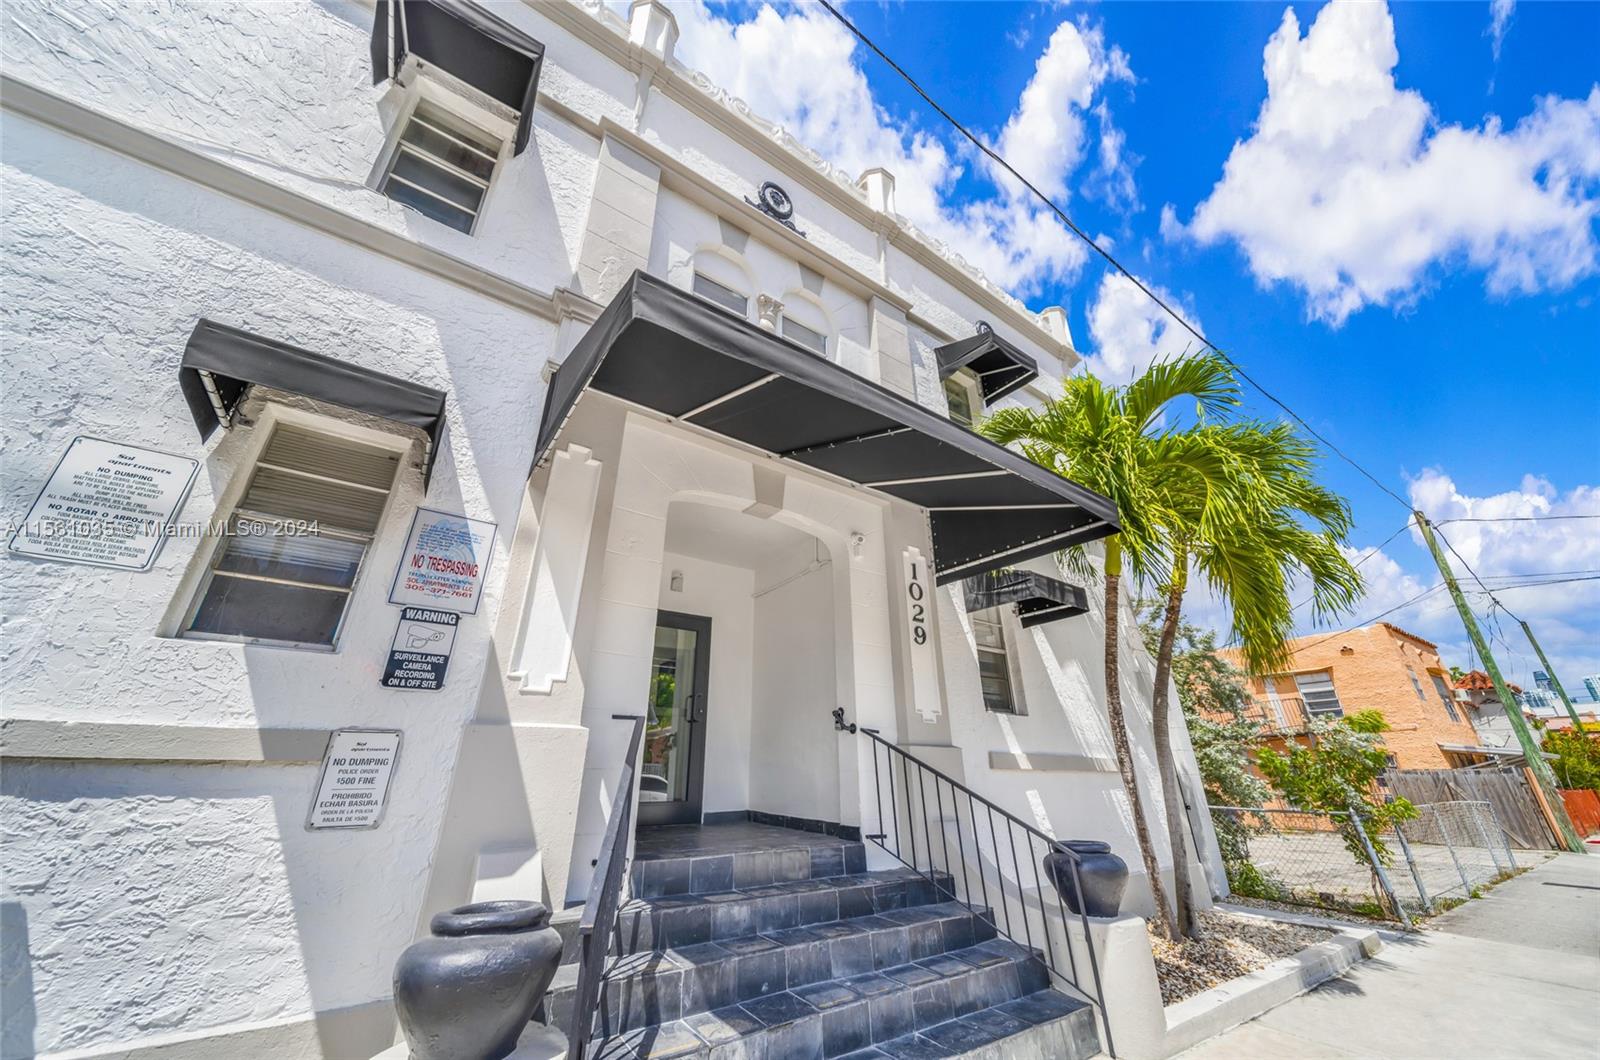 Rental Property at 1029 Sw 5th St, Miami, Broward County, Florida -  - $3,800,000 MO.